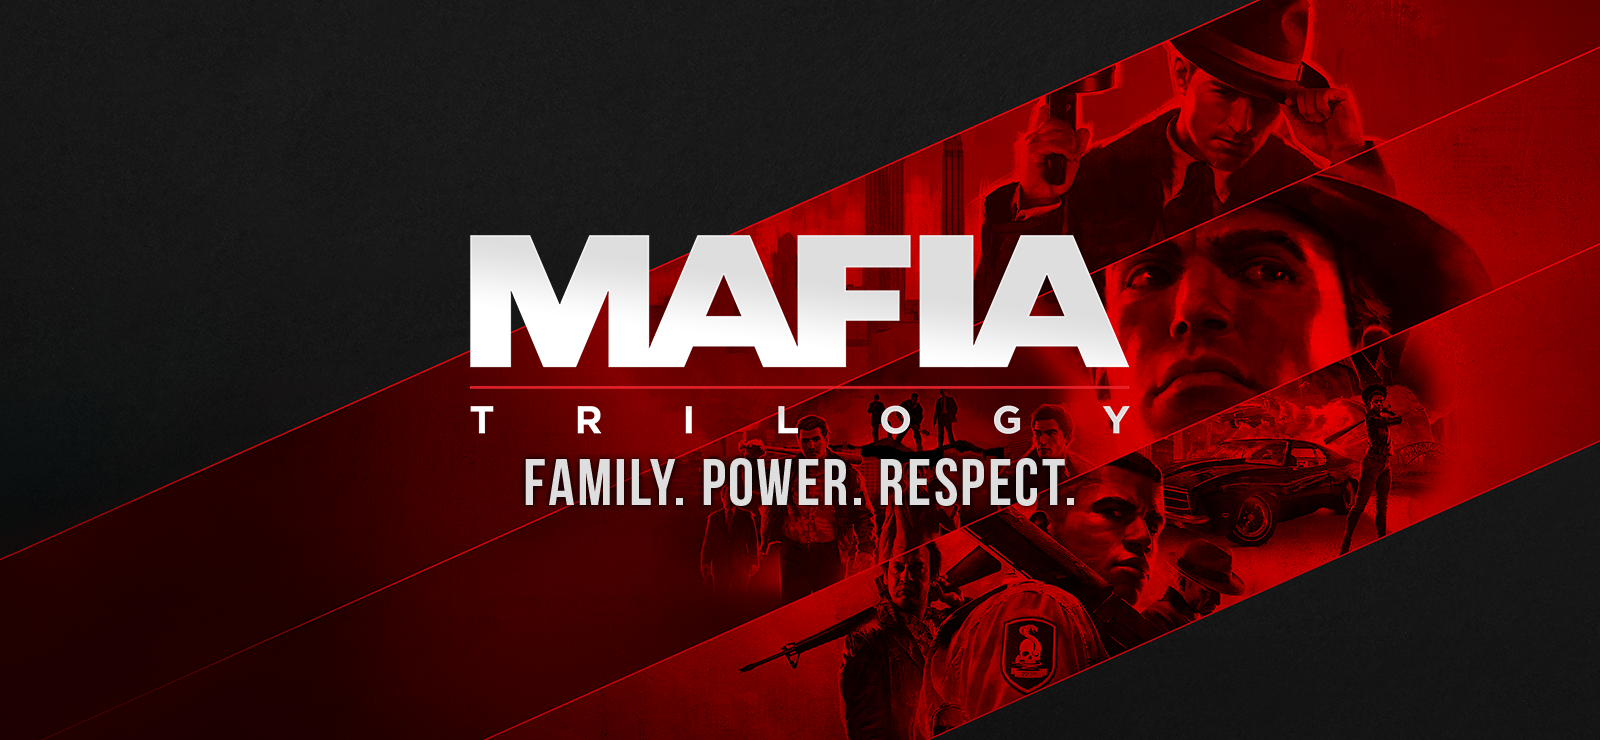 Mafia II: Definitive Edition Free Download » ExtroGames